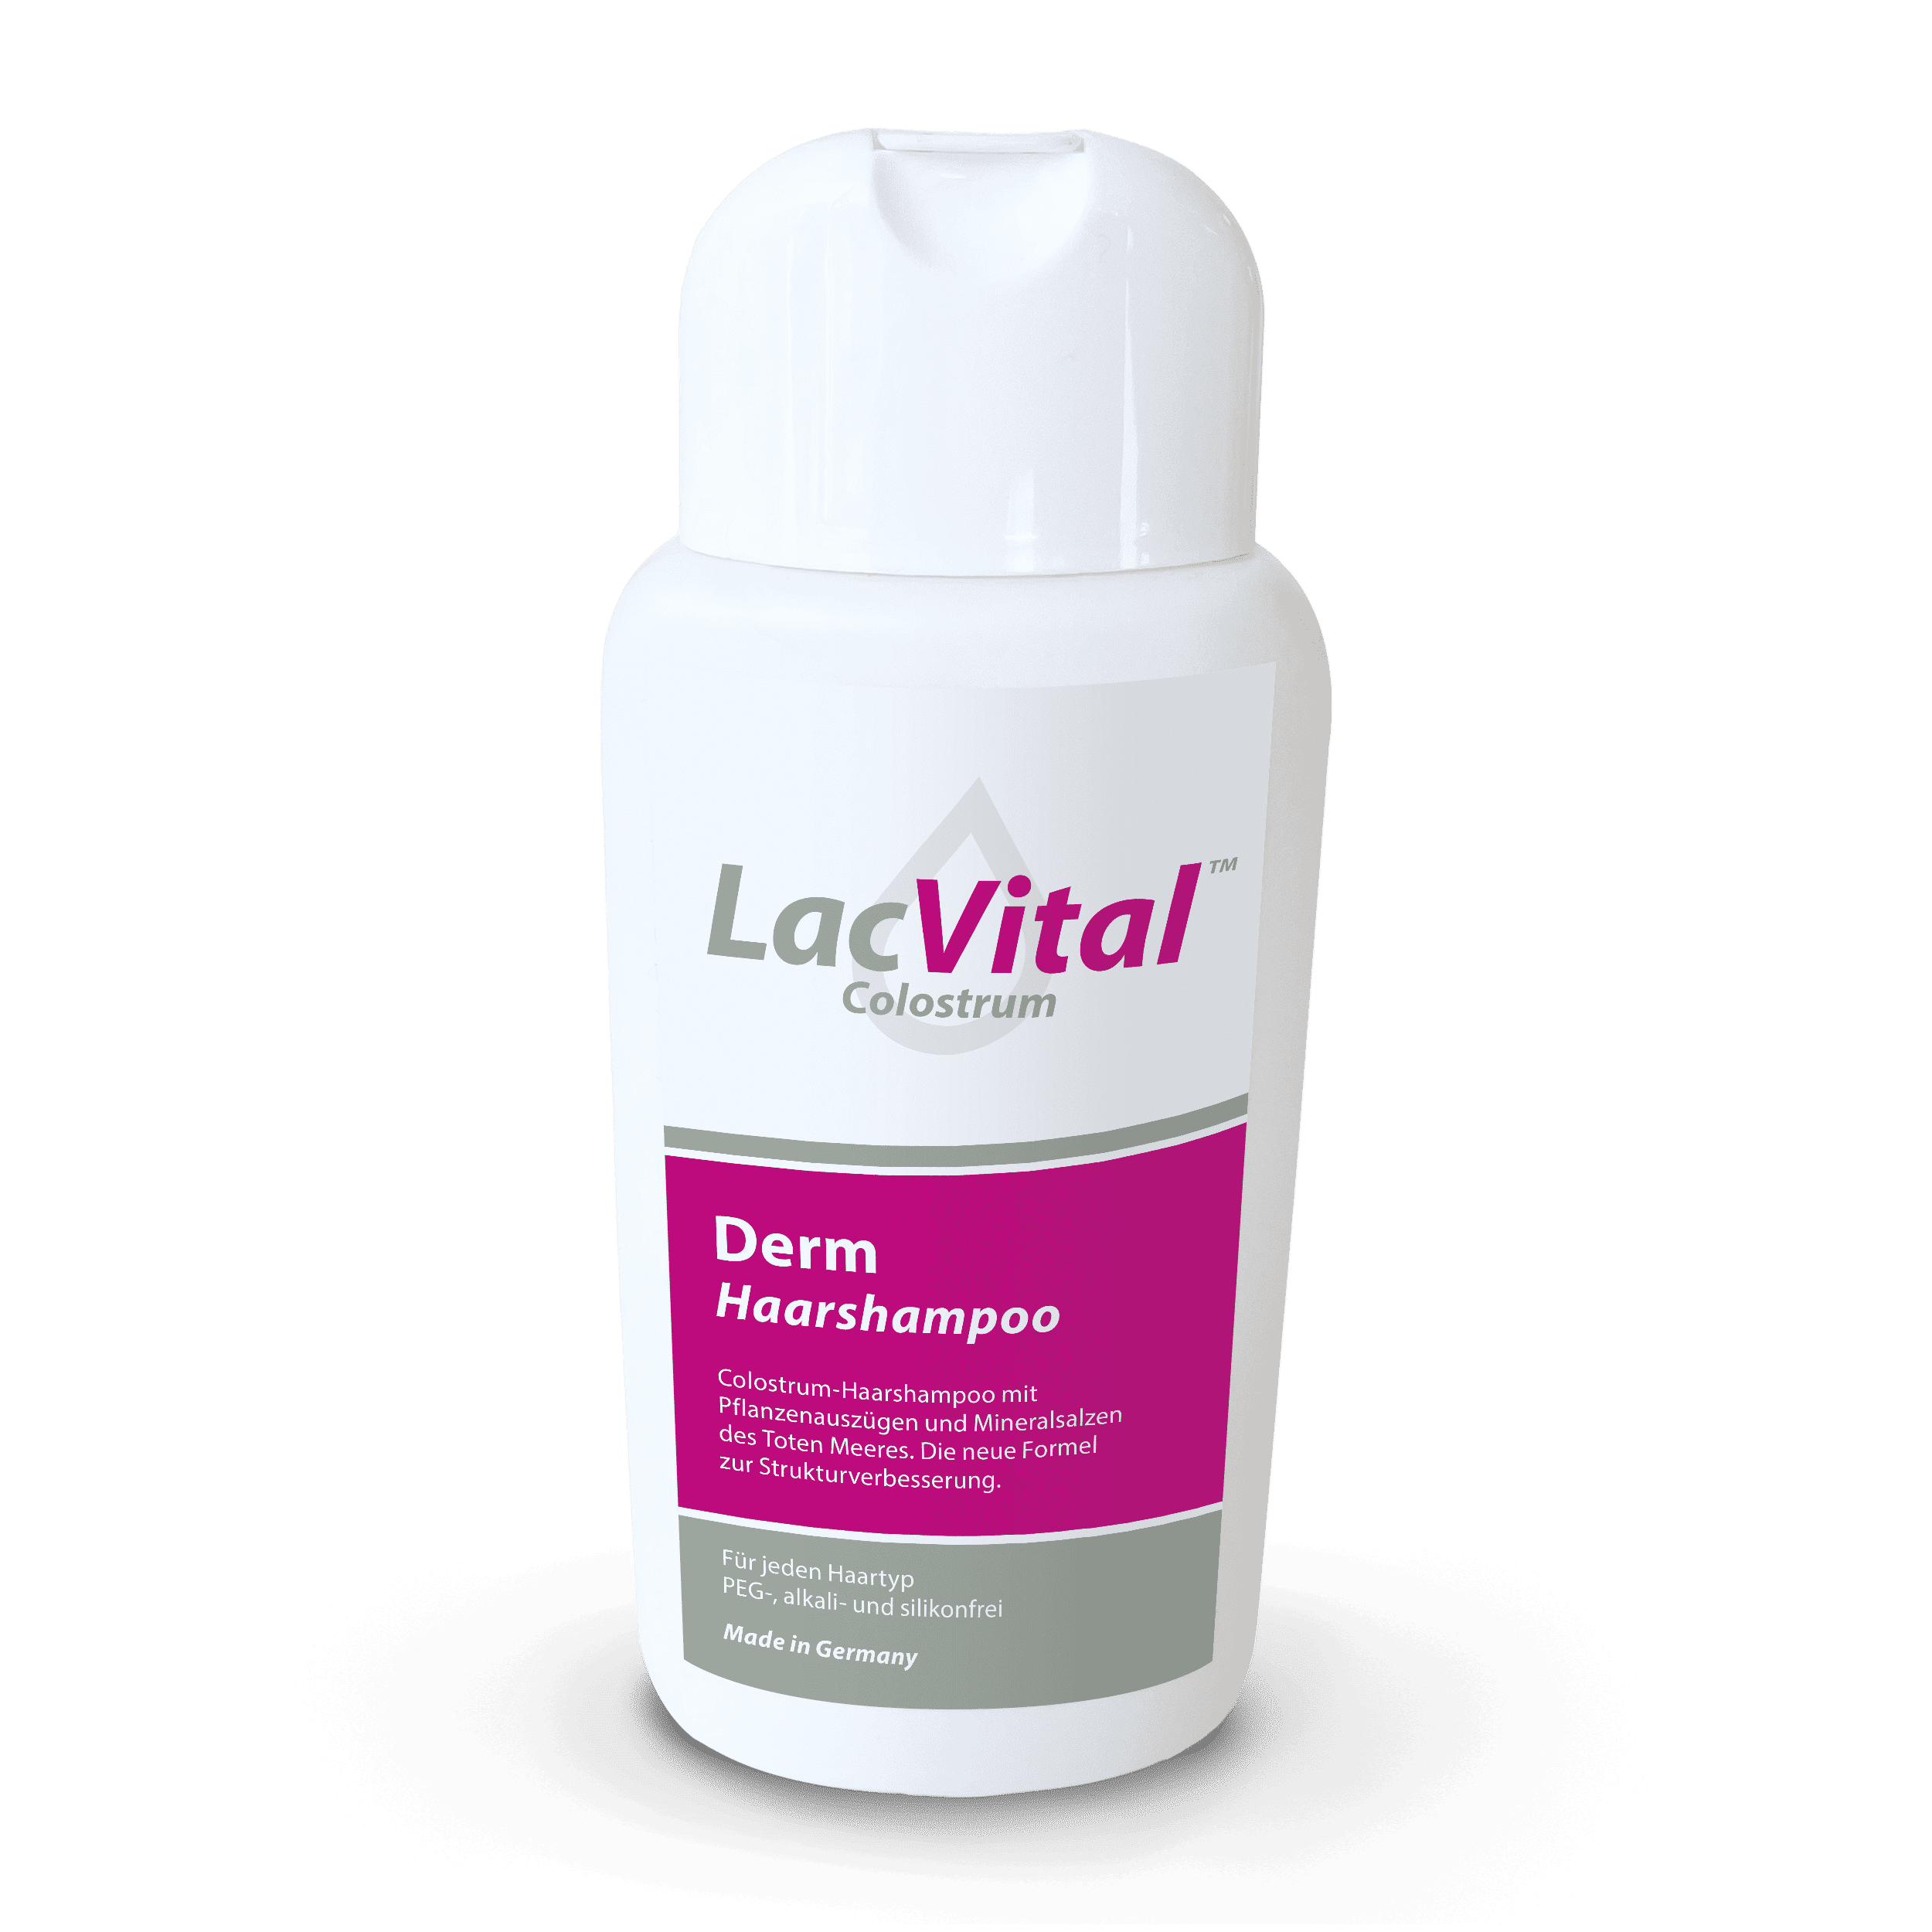 LacVital Colostrum Haarshampoo